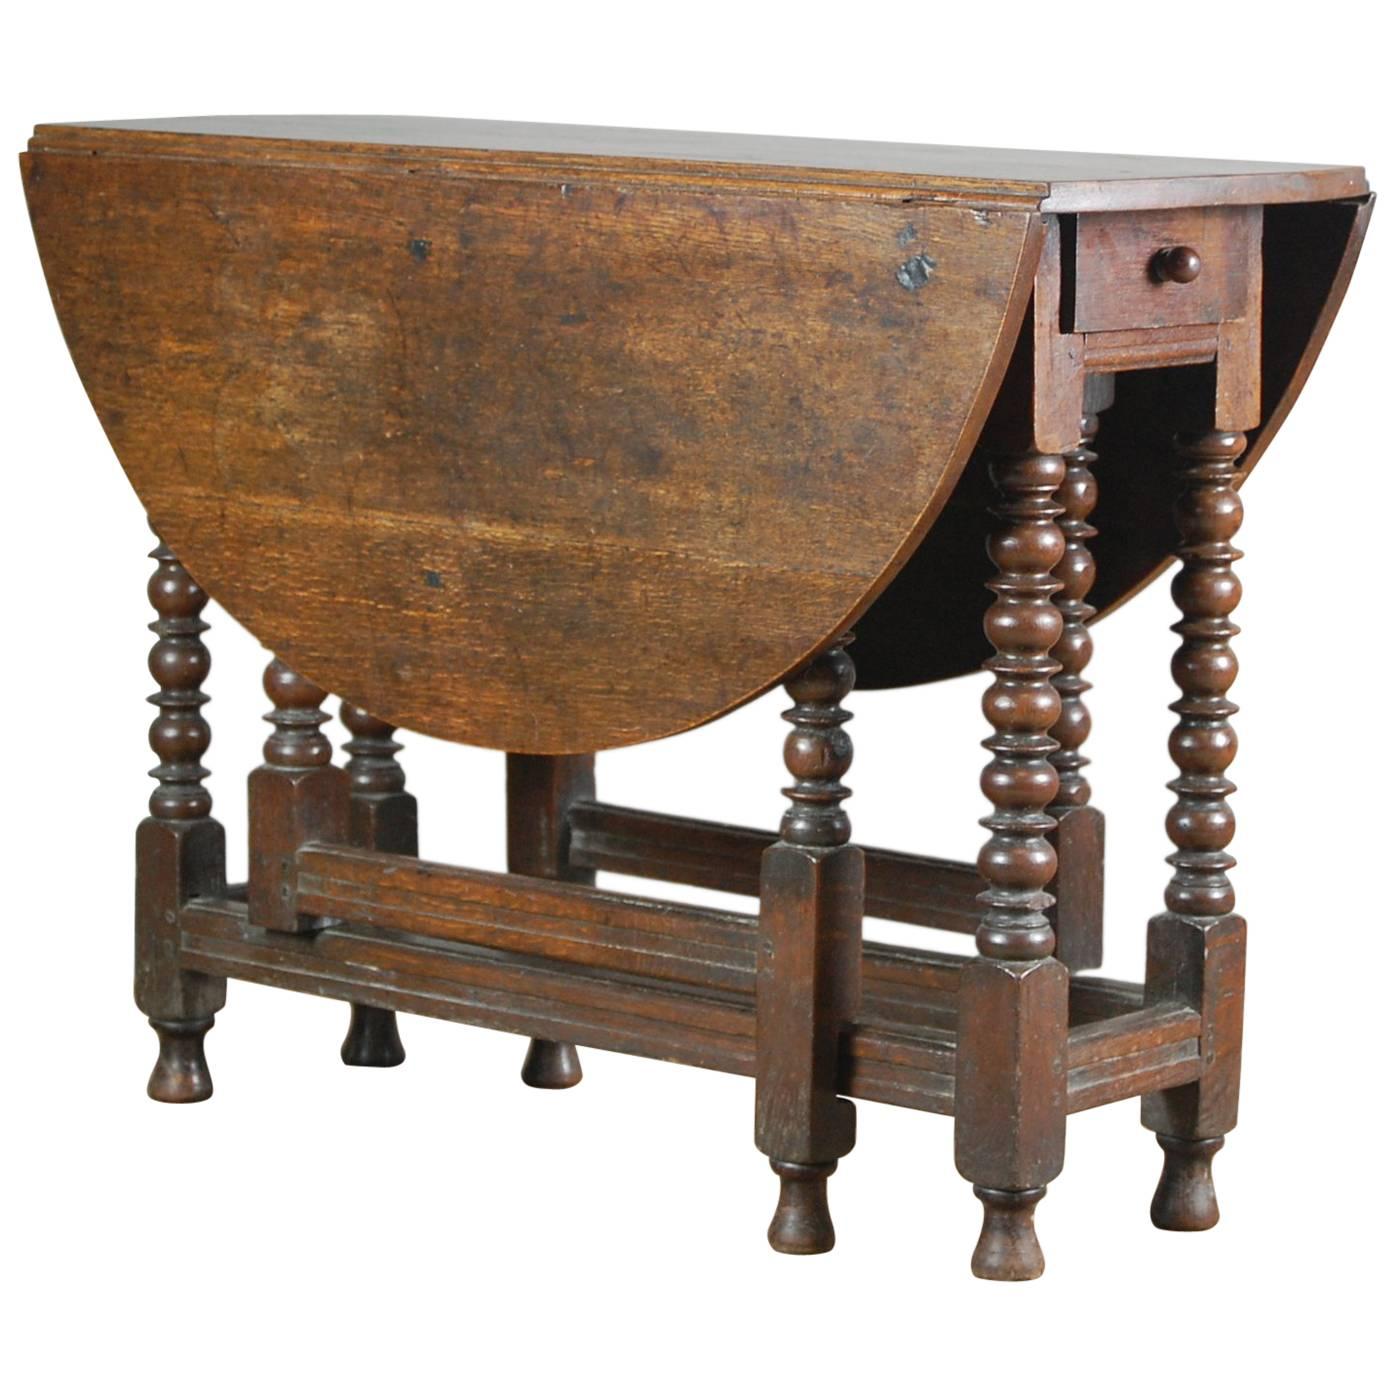 Early 19th Century English Oval Gateleg Table